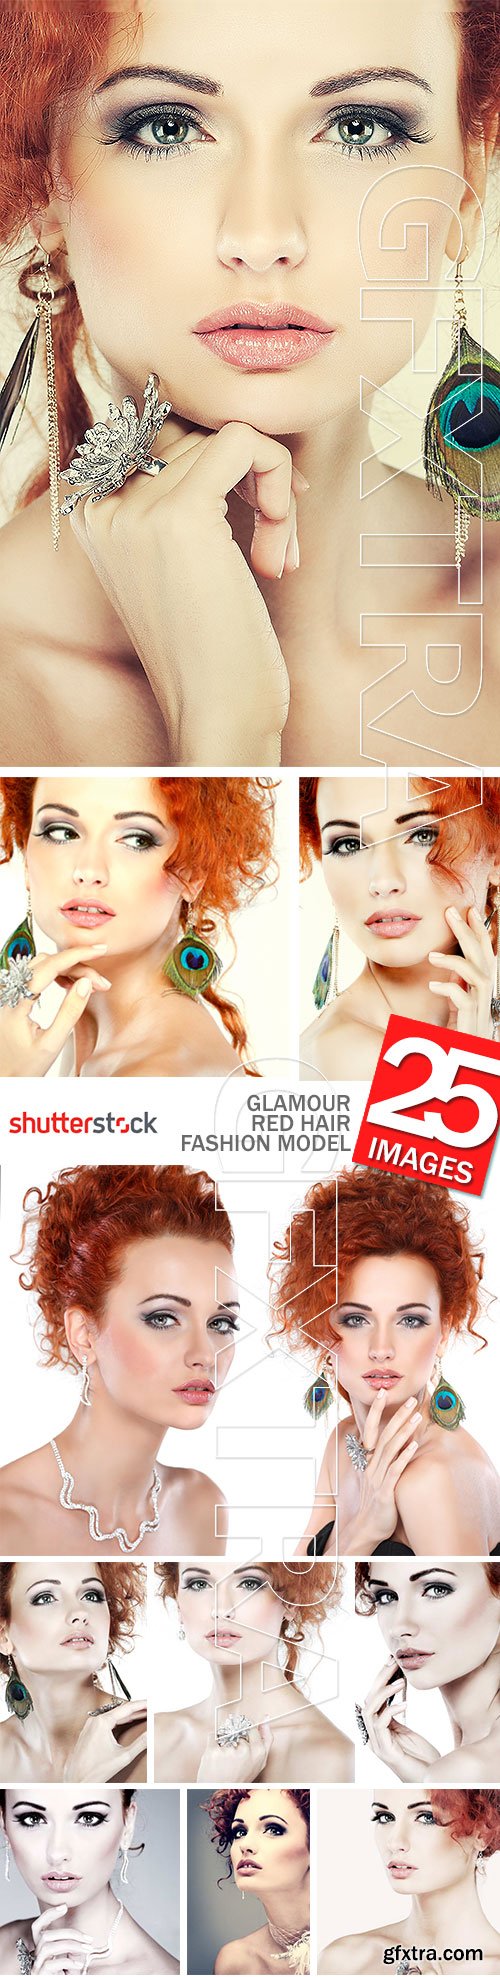 Glamour Red Hair Fashion Model 22xJPG